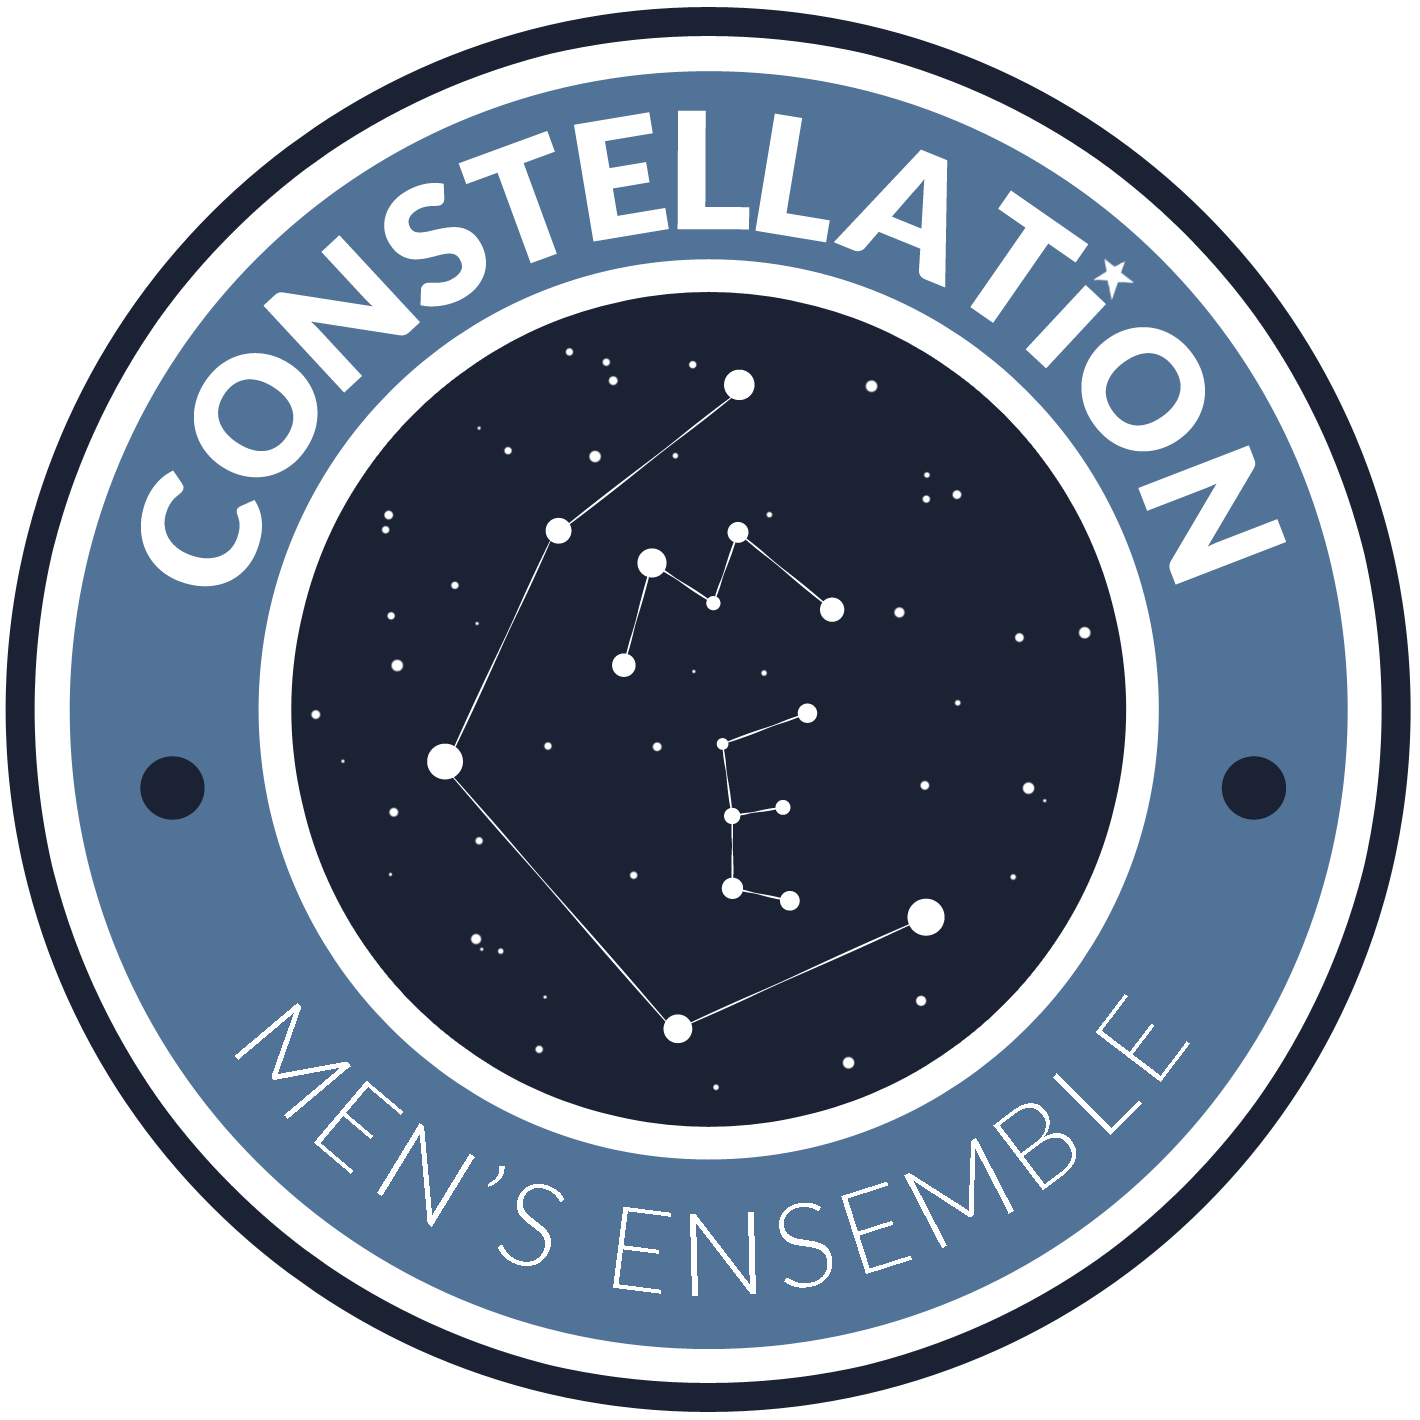 Constellation men's Ensemble logo